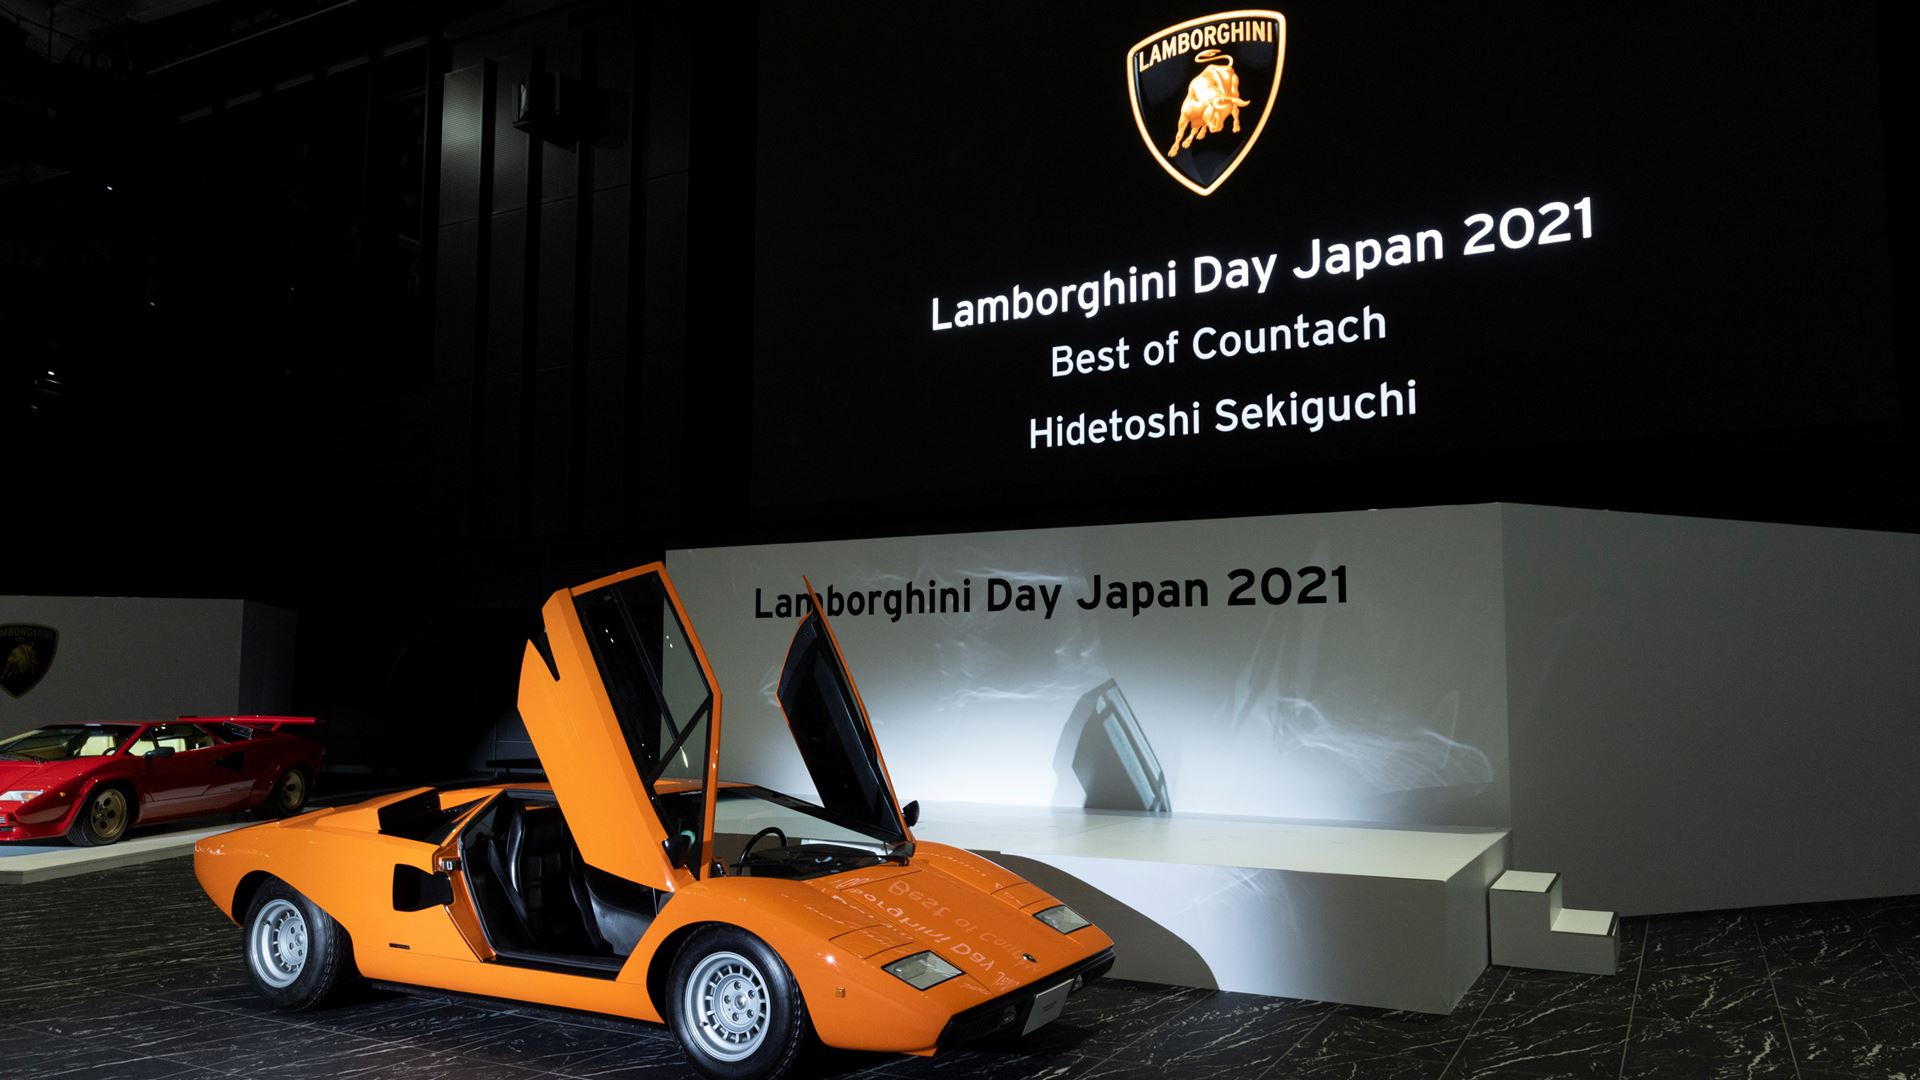 Lamborghini Day Japan 2021 commemorating the 50th anniversary of Countach - Image 2